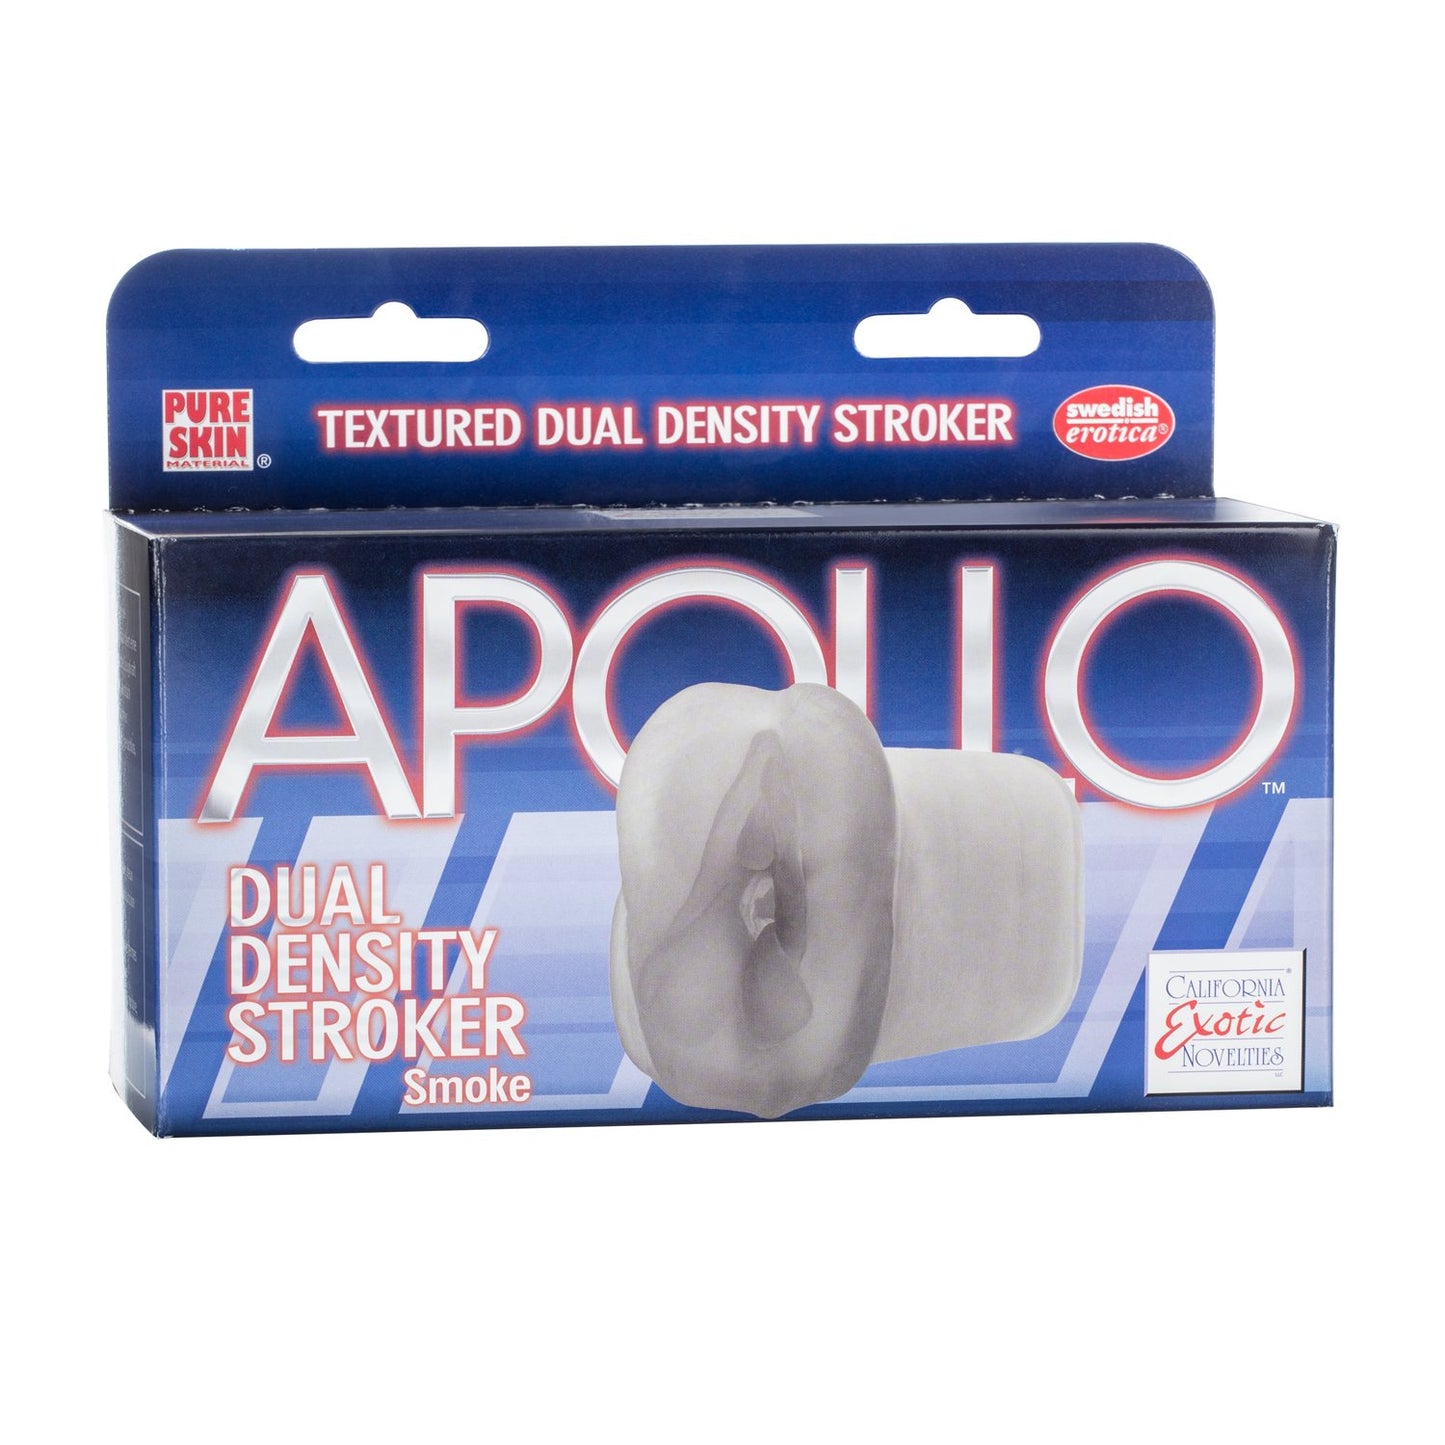 Apollo Dual Density Stroker